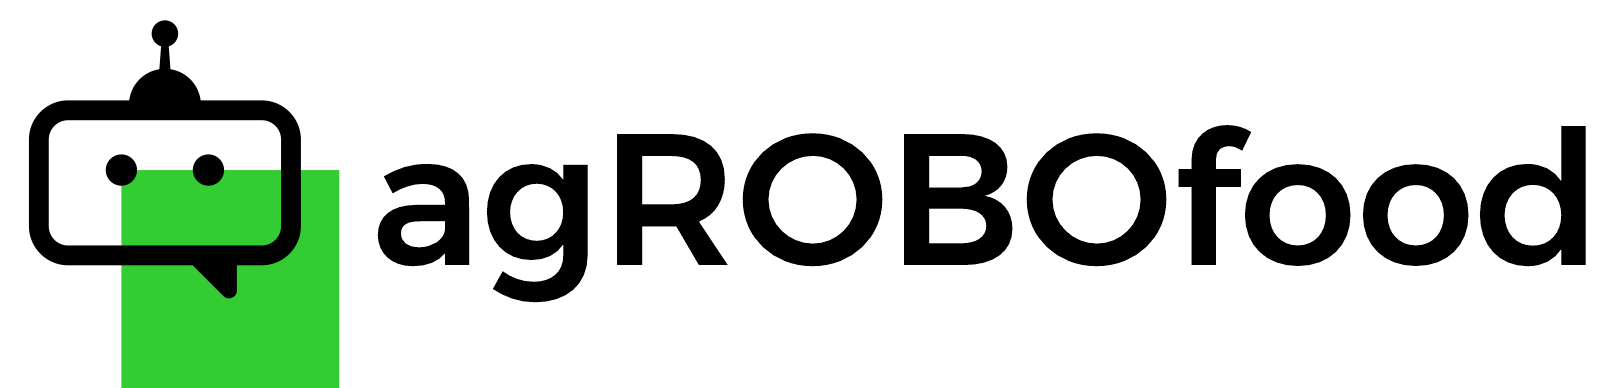 agrobofood-logo